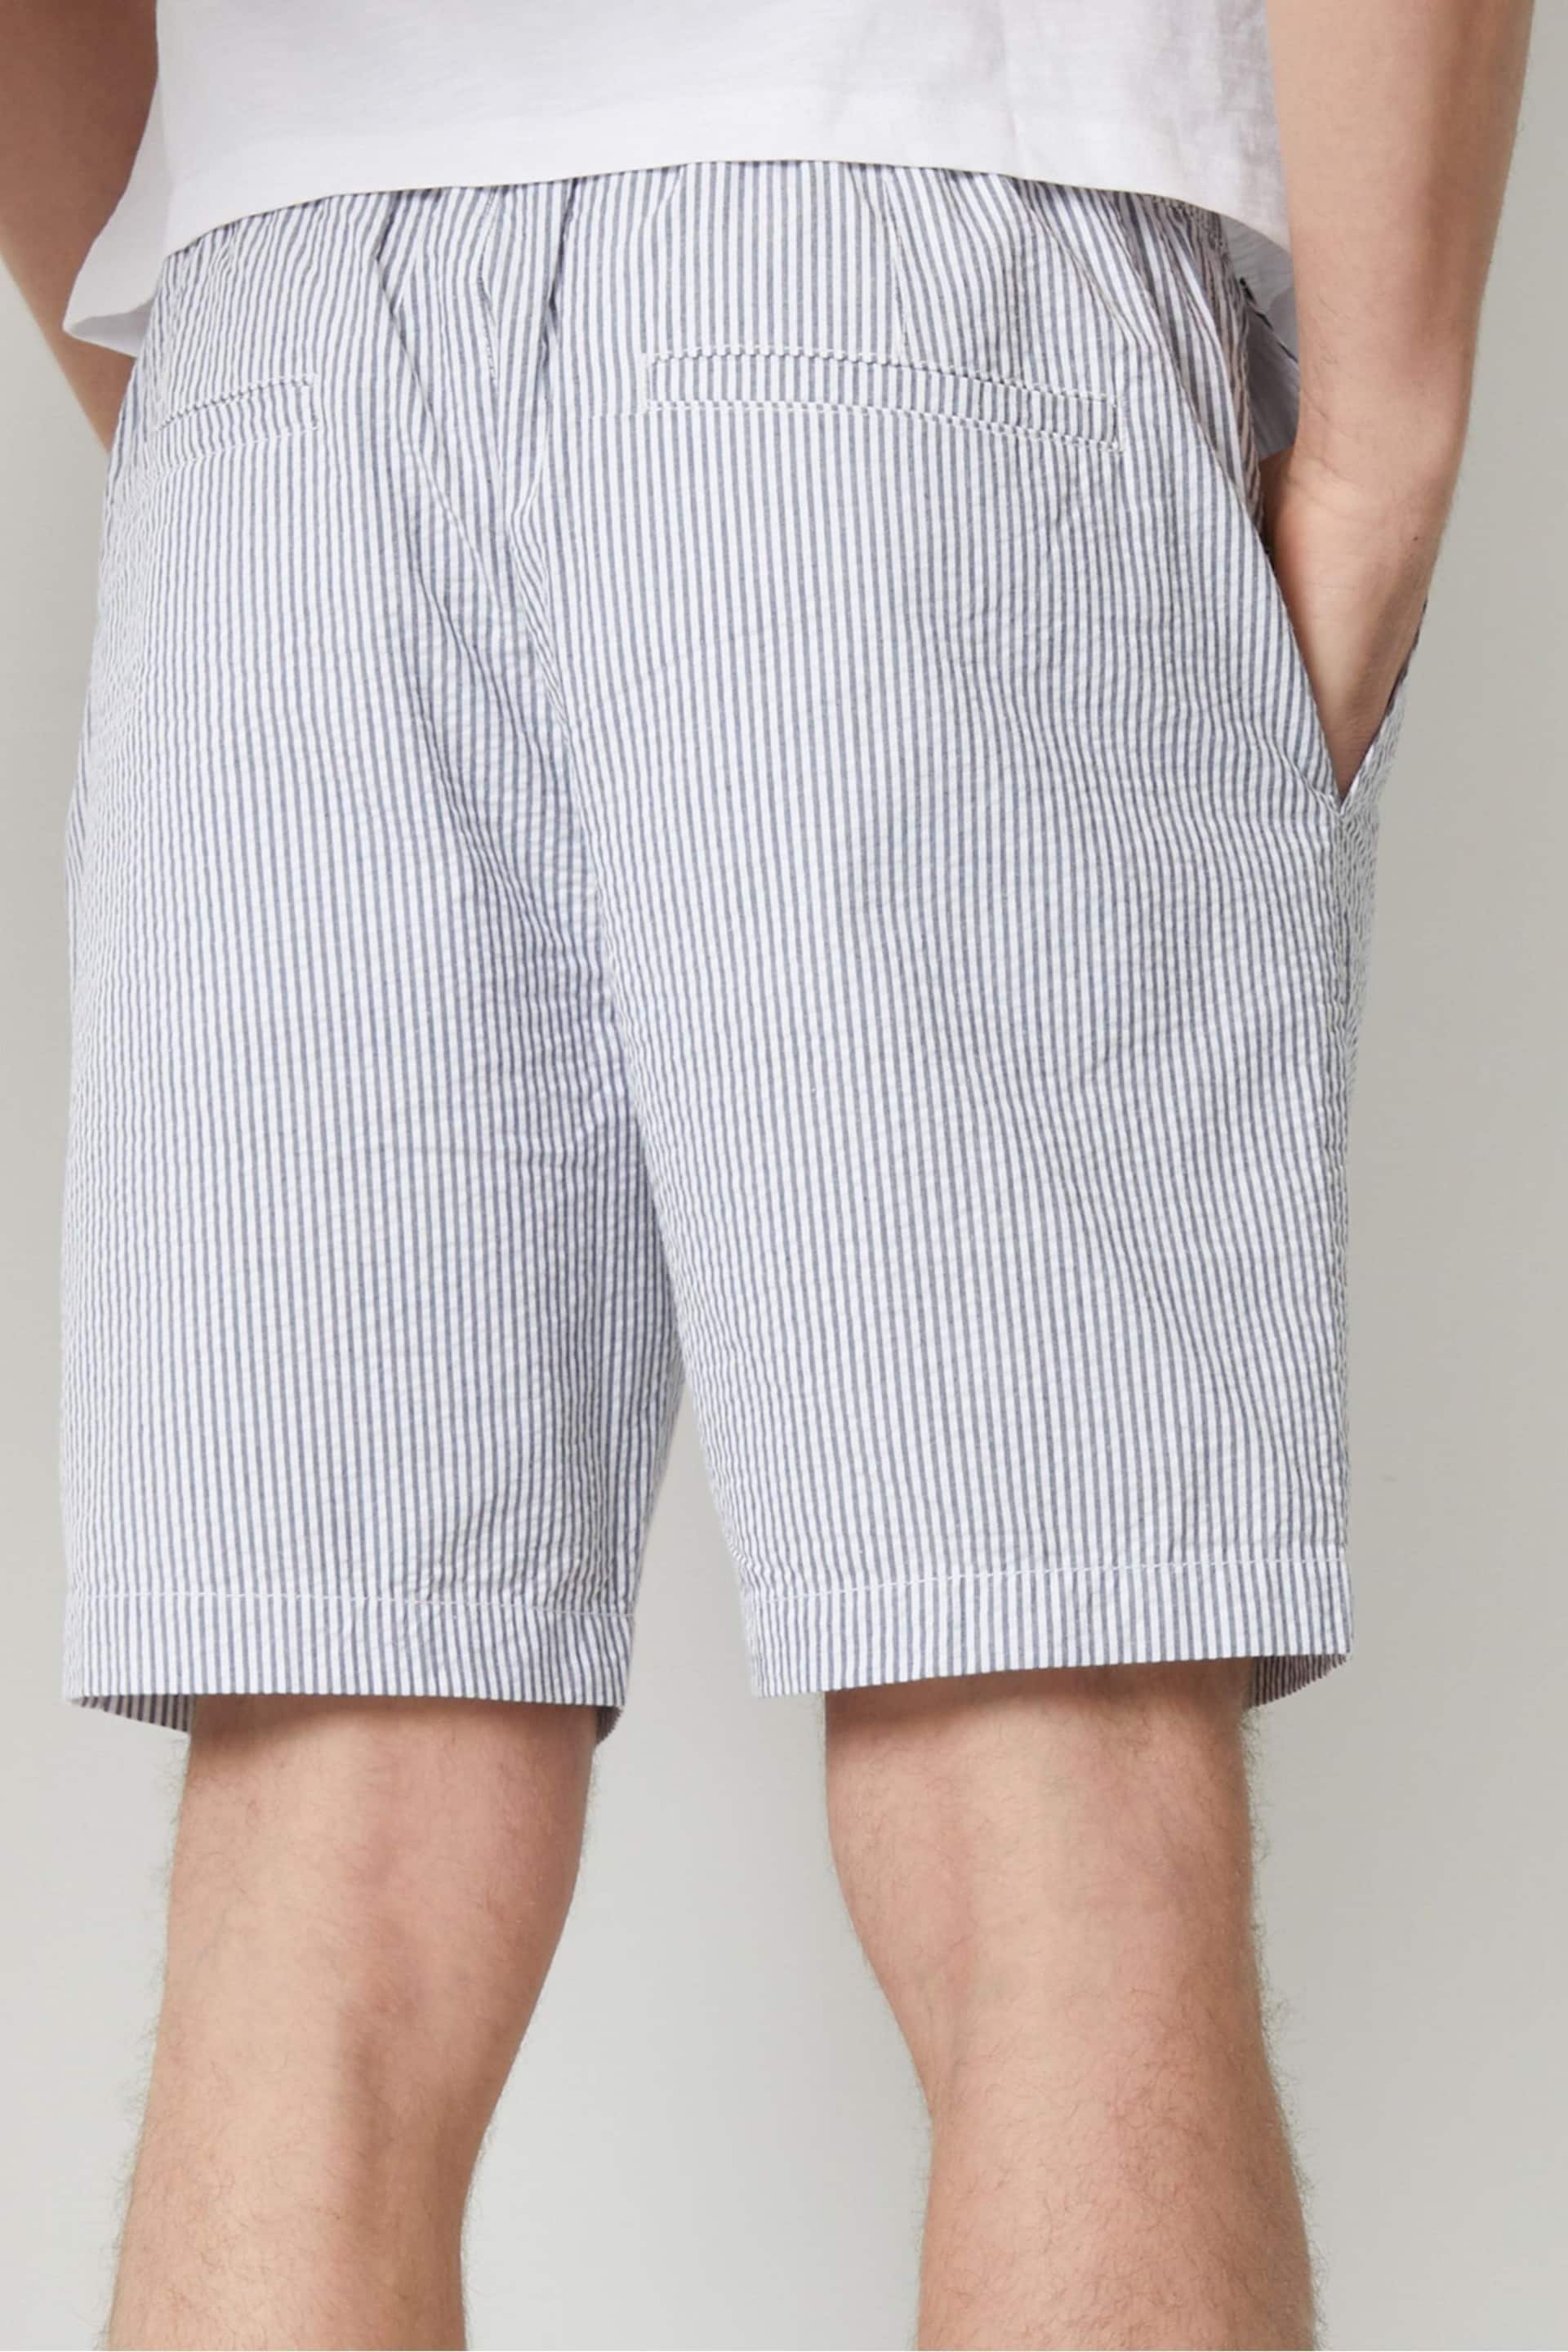 Threadbare Navy Elasticated Waist Seersucker Cotton Shorts - Image 4 of 5